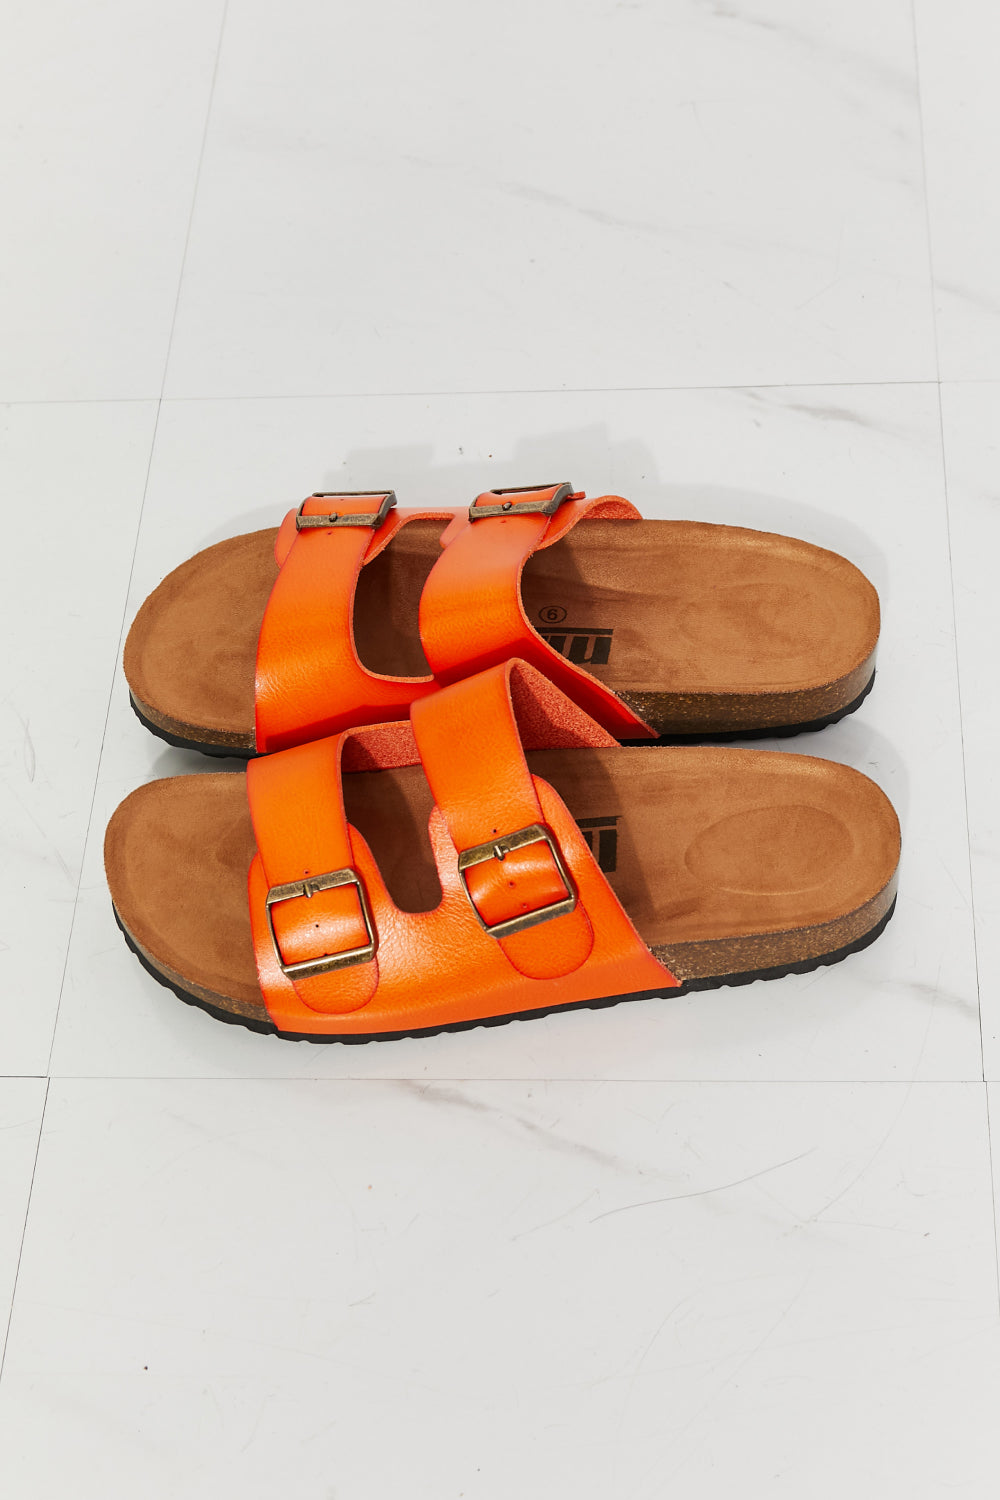 MMShoes Feeling Alive Double Banded Slide Sandals in Orange - Tigbul's Fashion